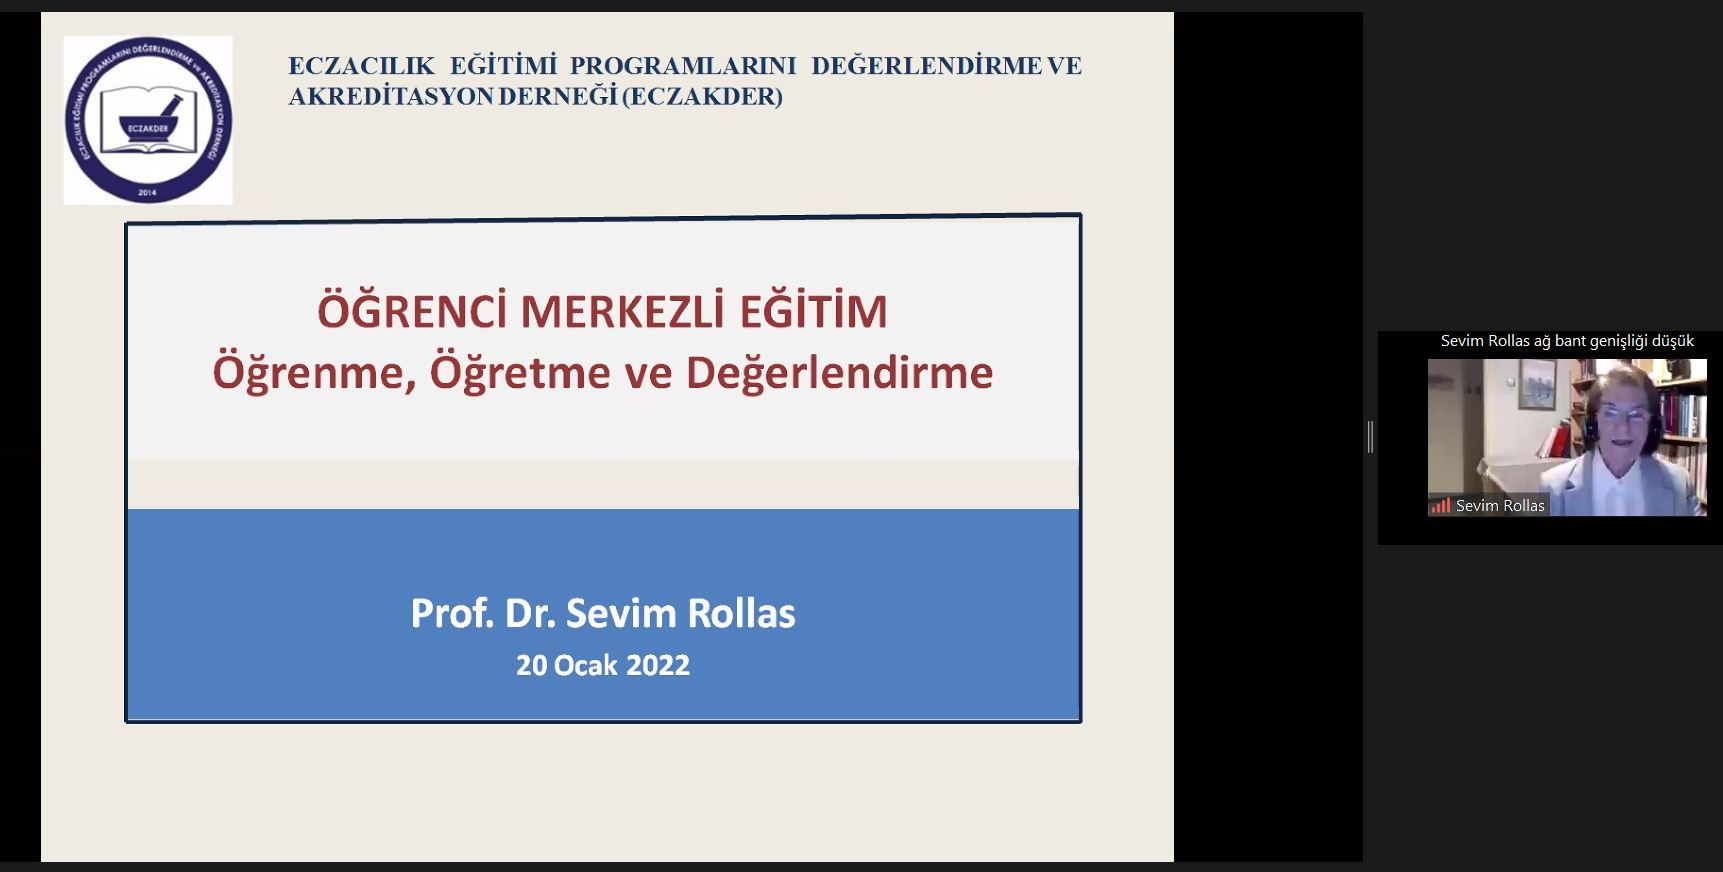 Prof. Dr. Sevim Rollas’tan Öğrenci Merkezli Eğitim konulu konferans